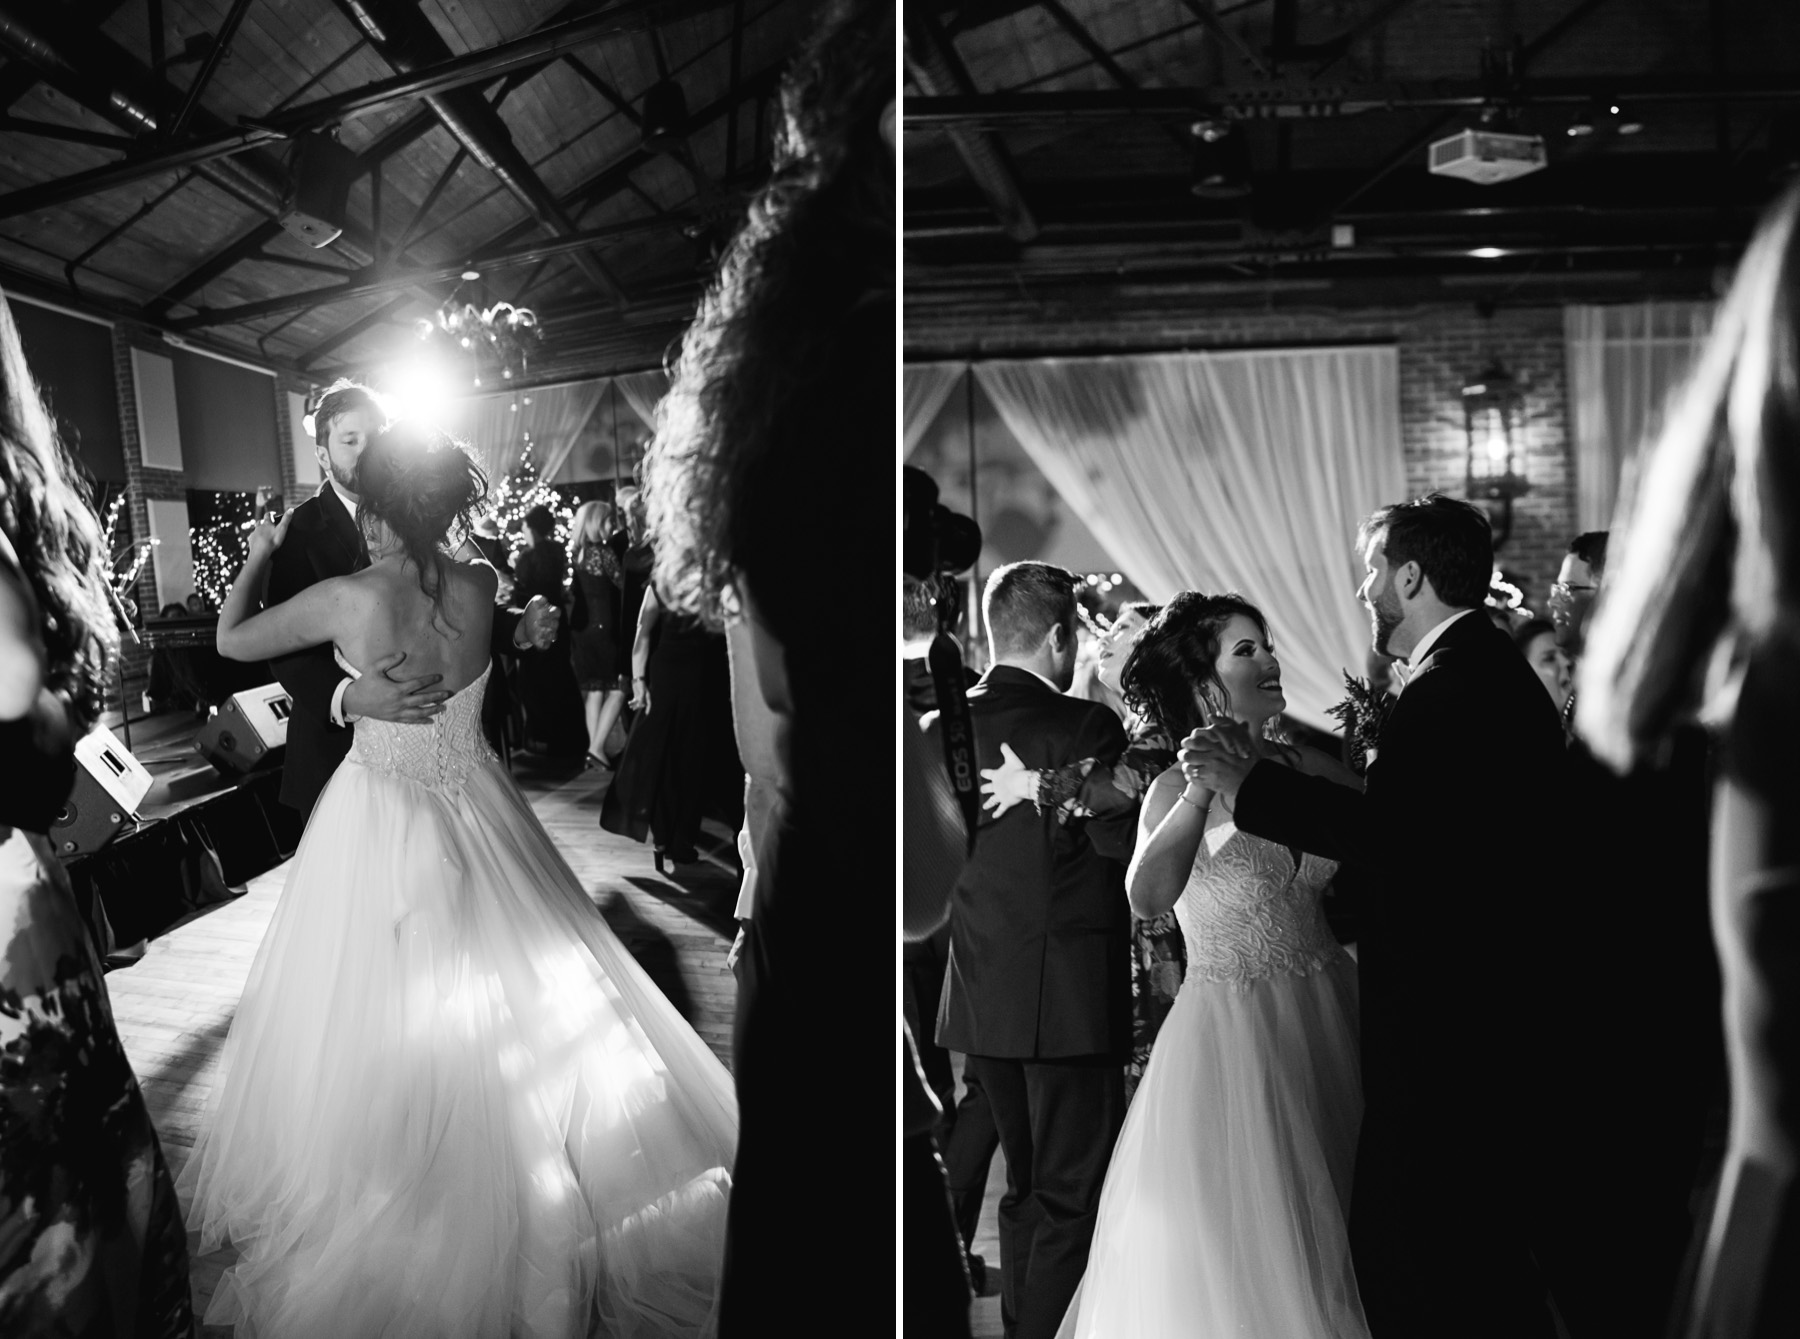 Ryan & Kevin | A Winterwonderland Wedding | Anna Wisjo Photography